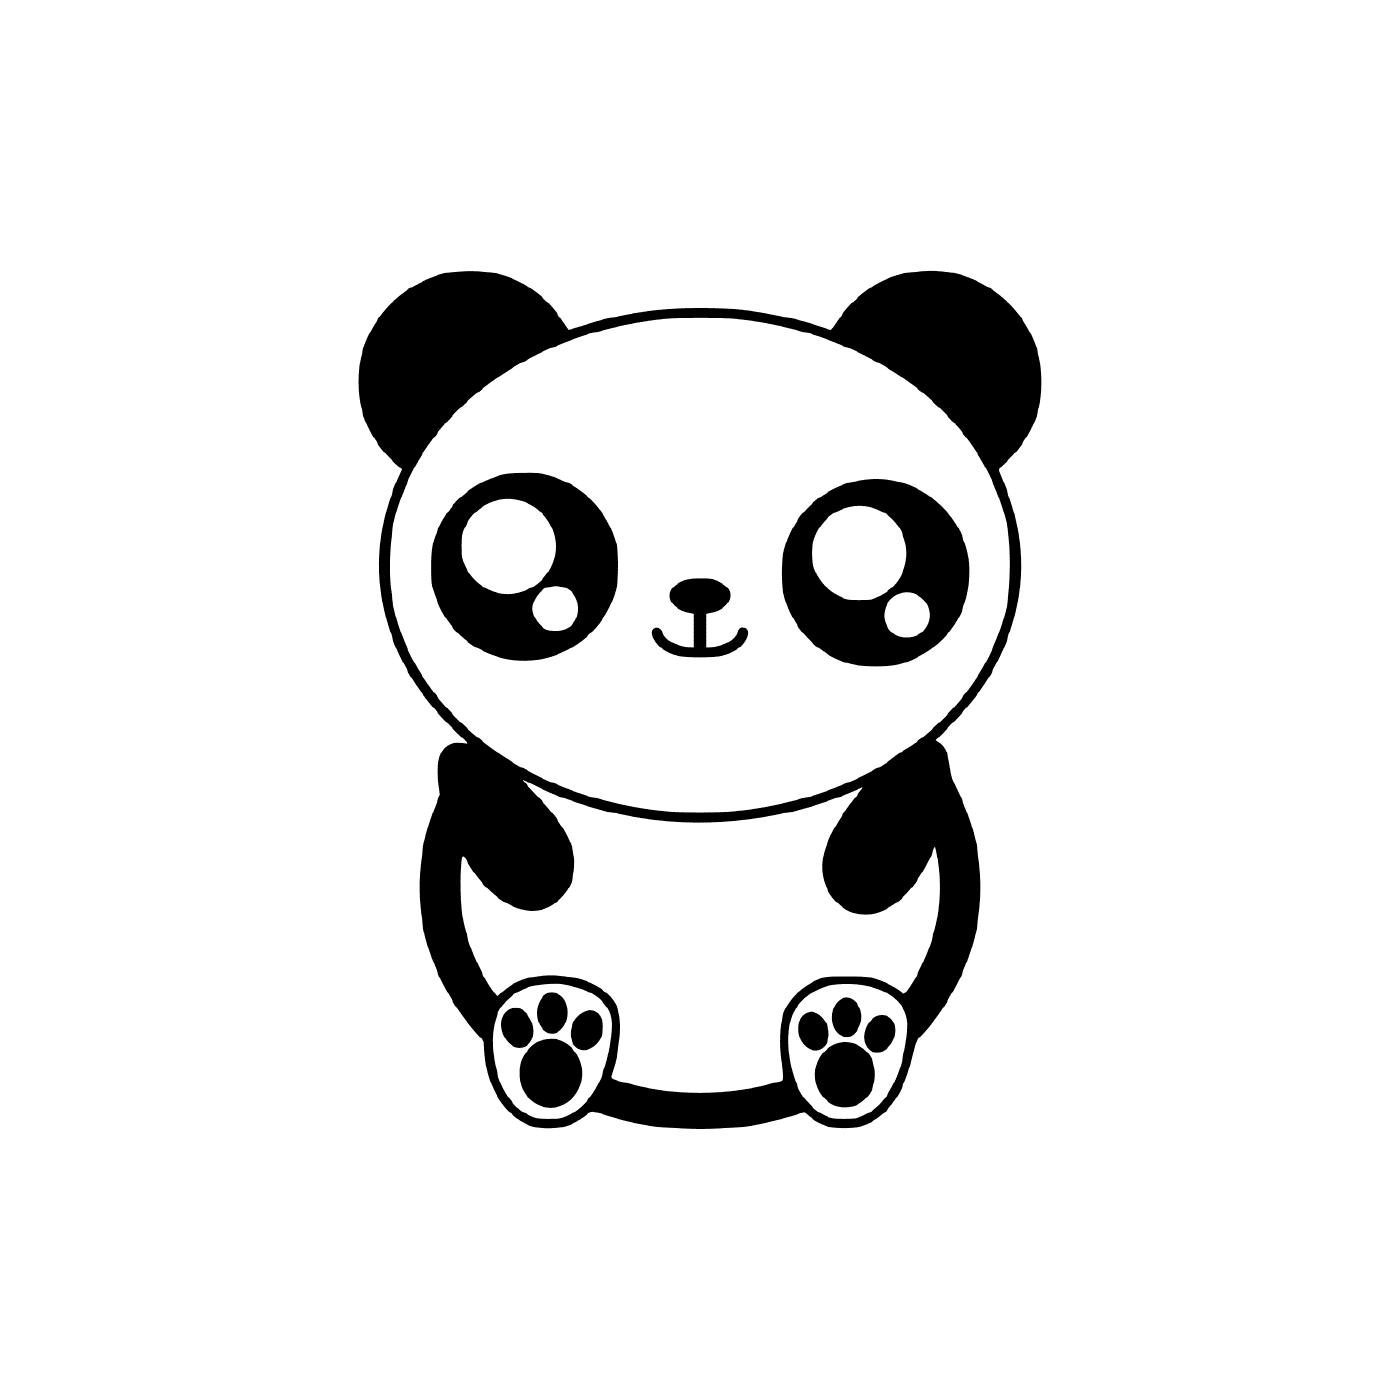  dolce panda adorabile 